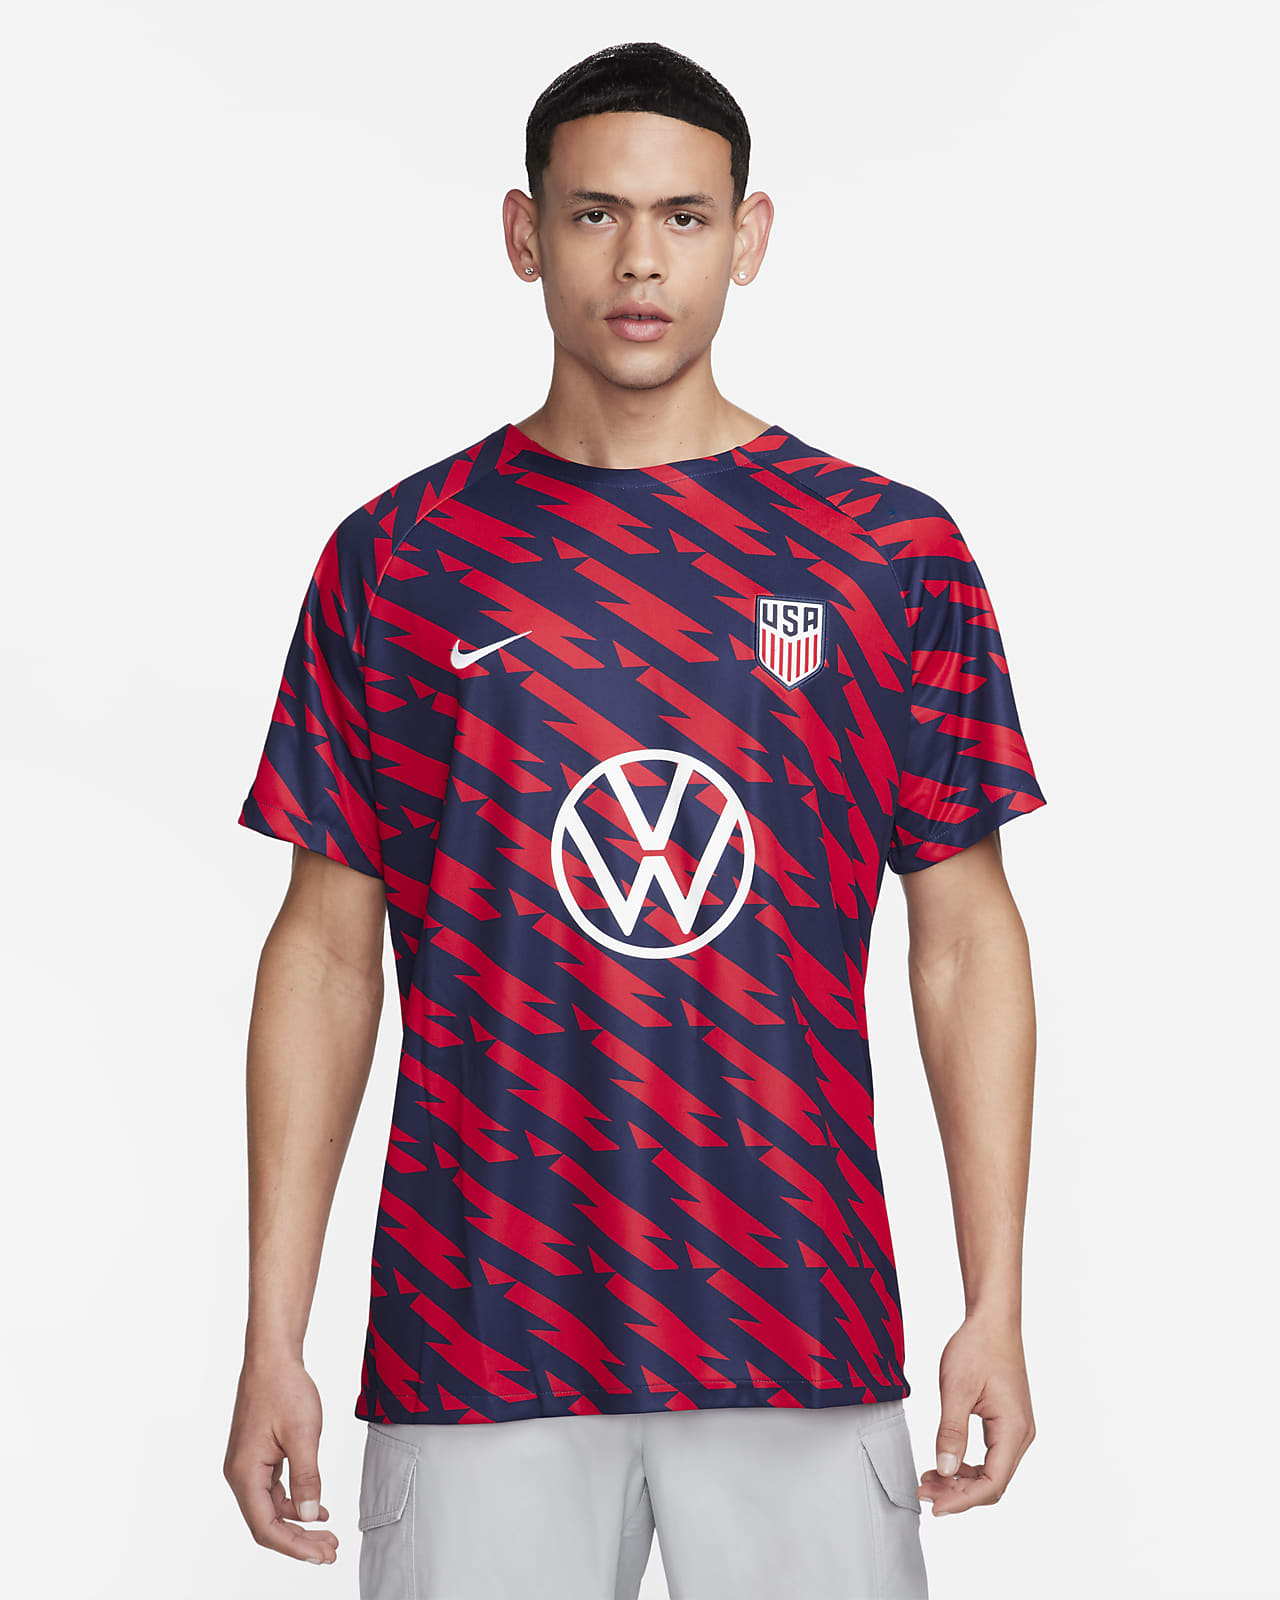 Men's Nike USA Legend Navy Tee - Official U.S. Soccer Store